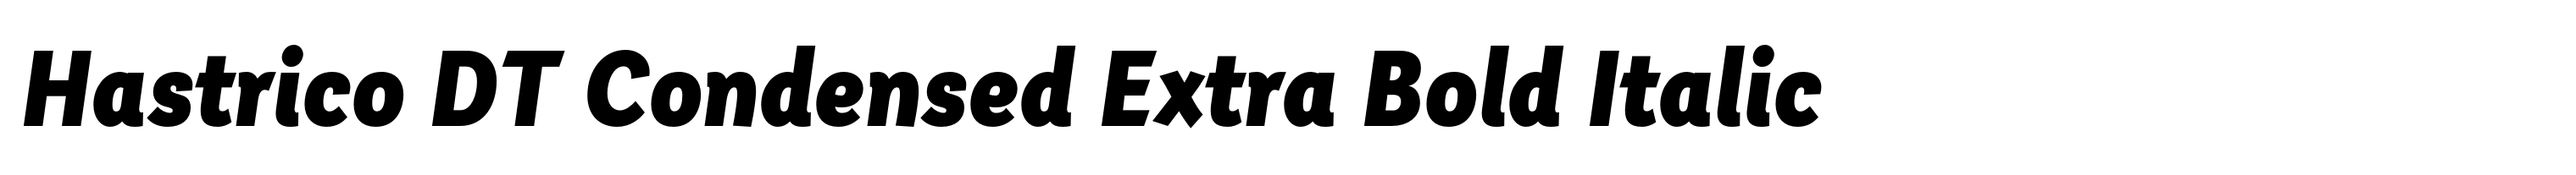 Hastrico DT Condensed Extra Bold Italic